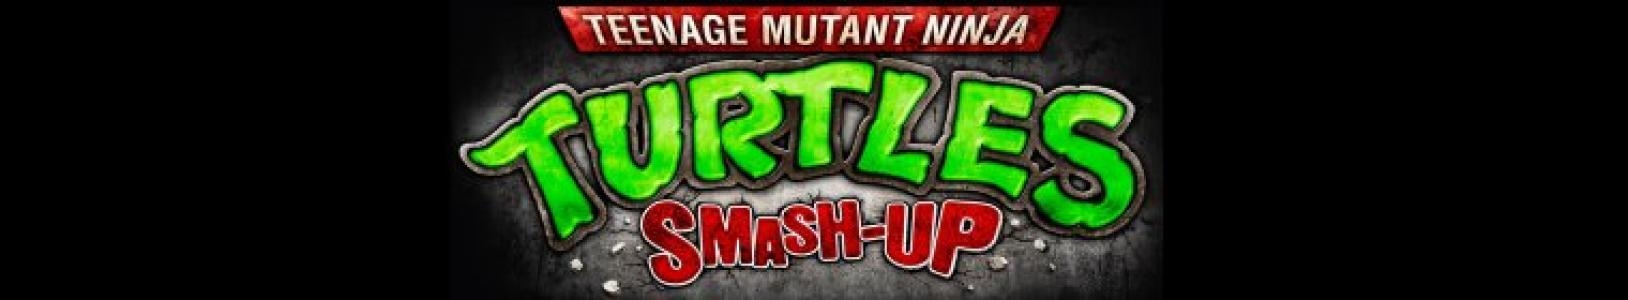 Teenage Mutant Ninja Turtles: Smash-Up banner